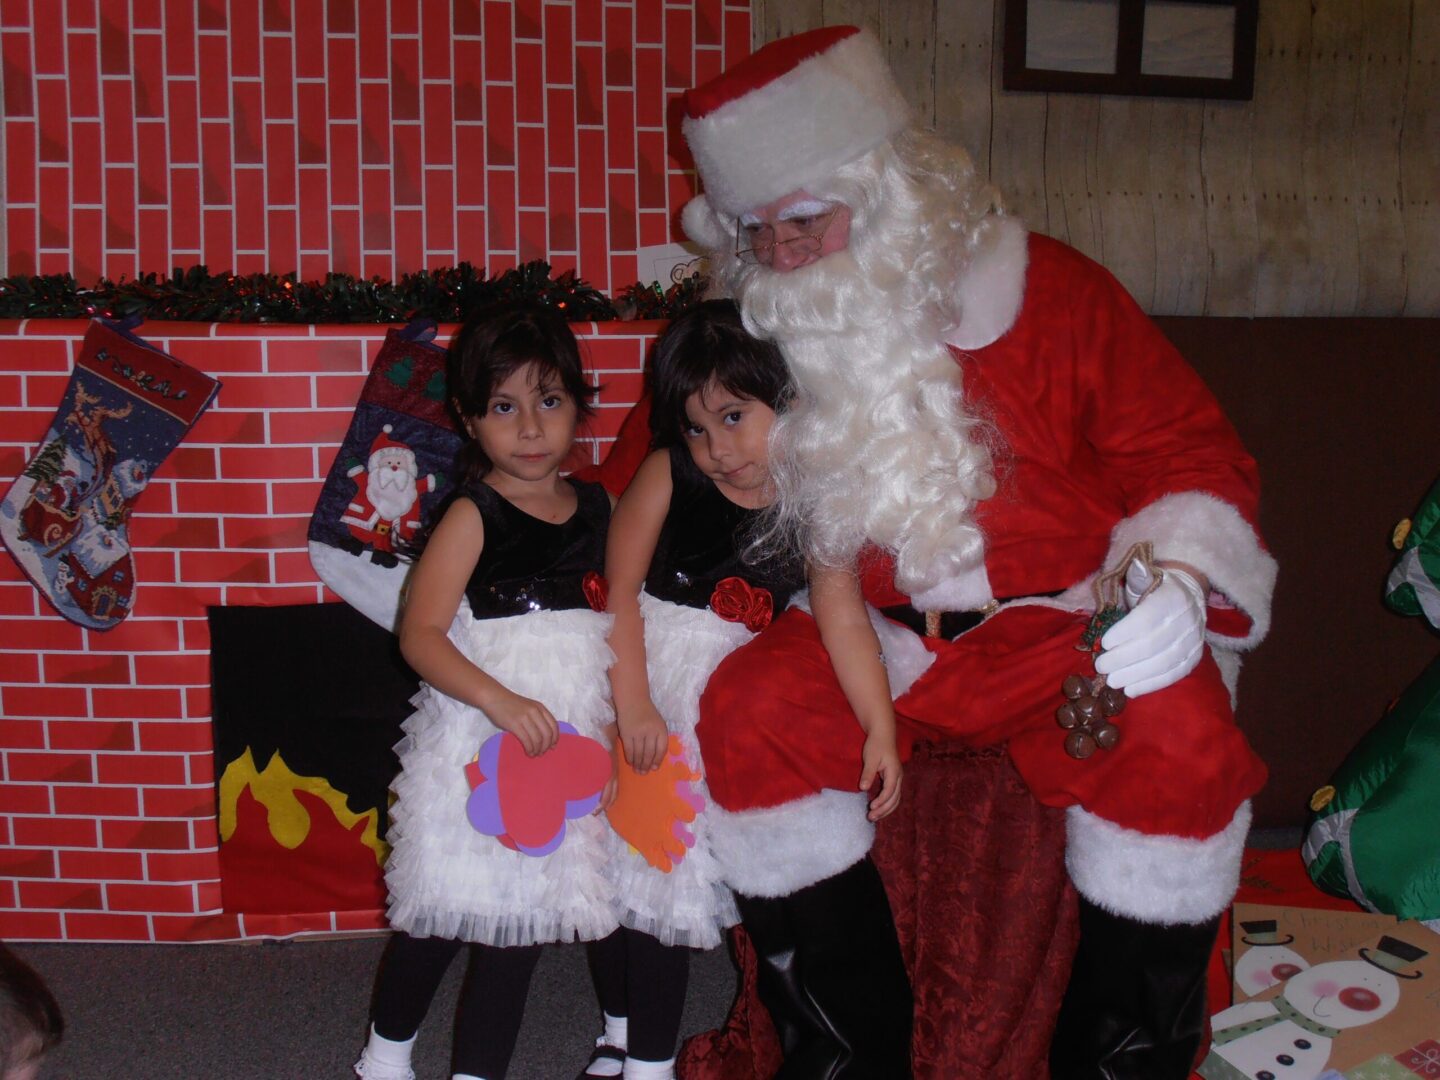 Santa and kids at Christmas time